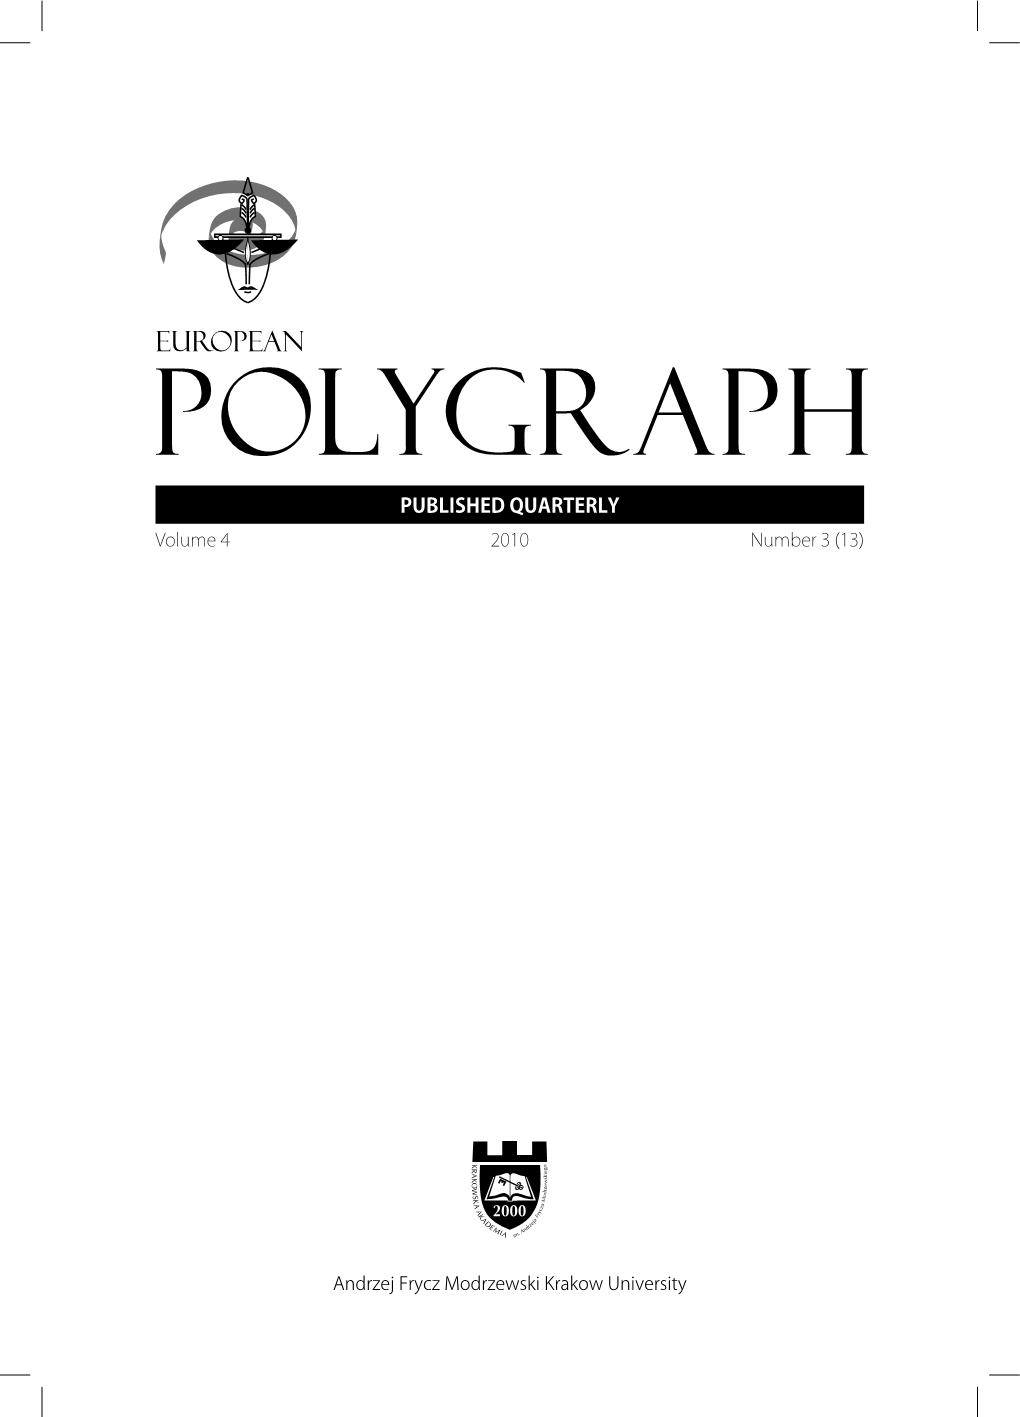 Polygraph Examination as Scientific Evidence